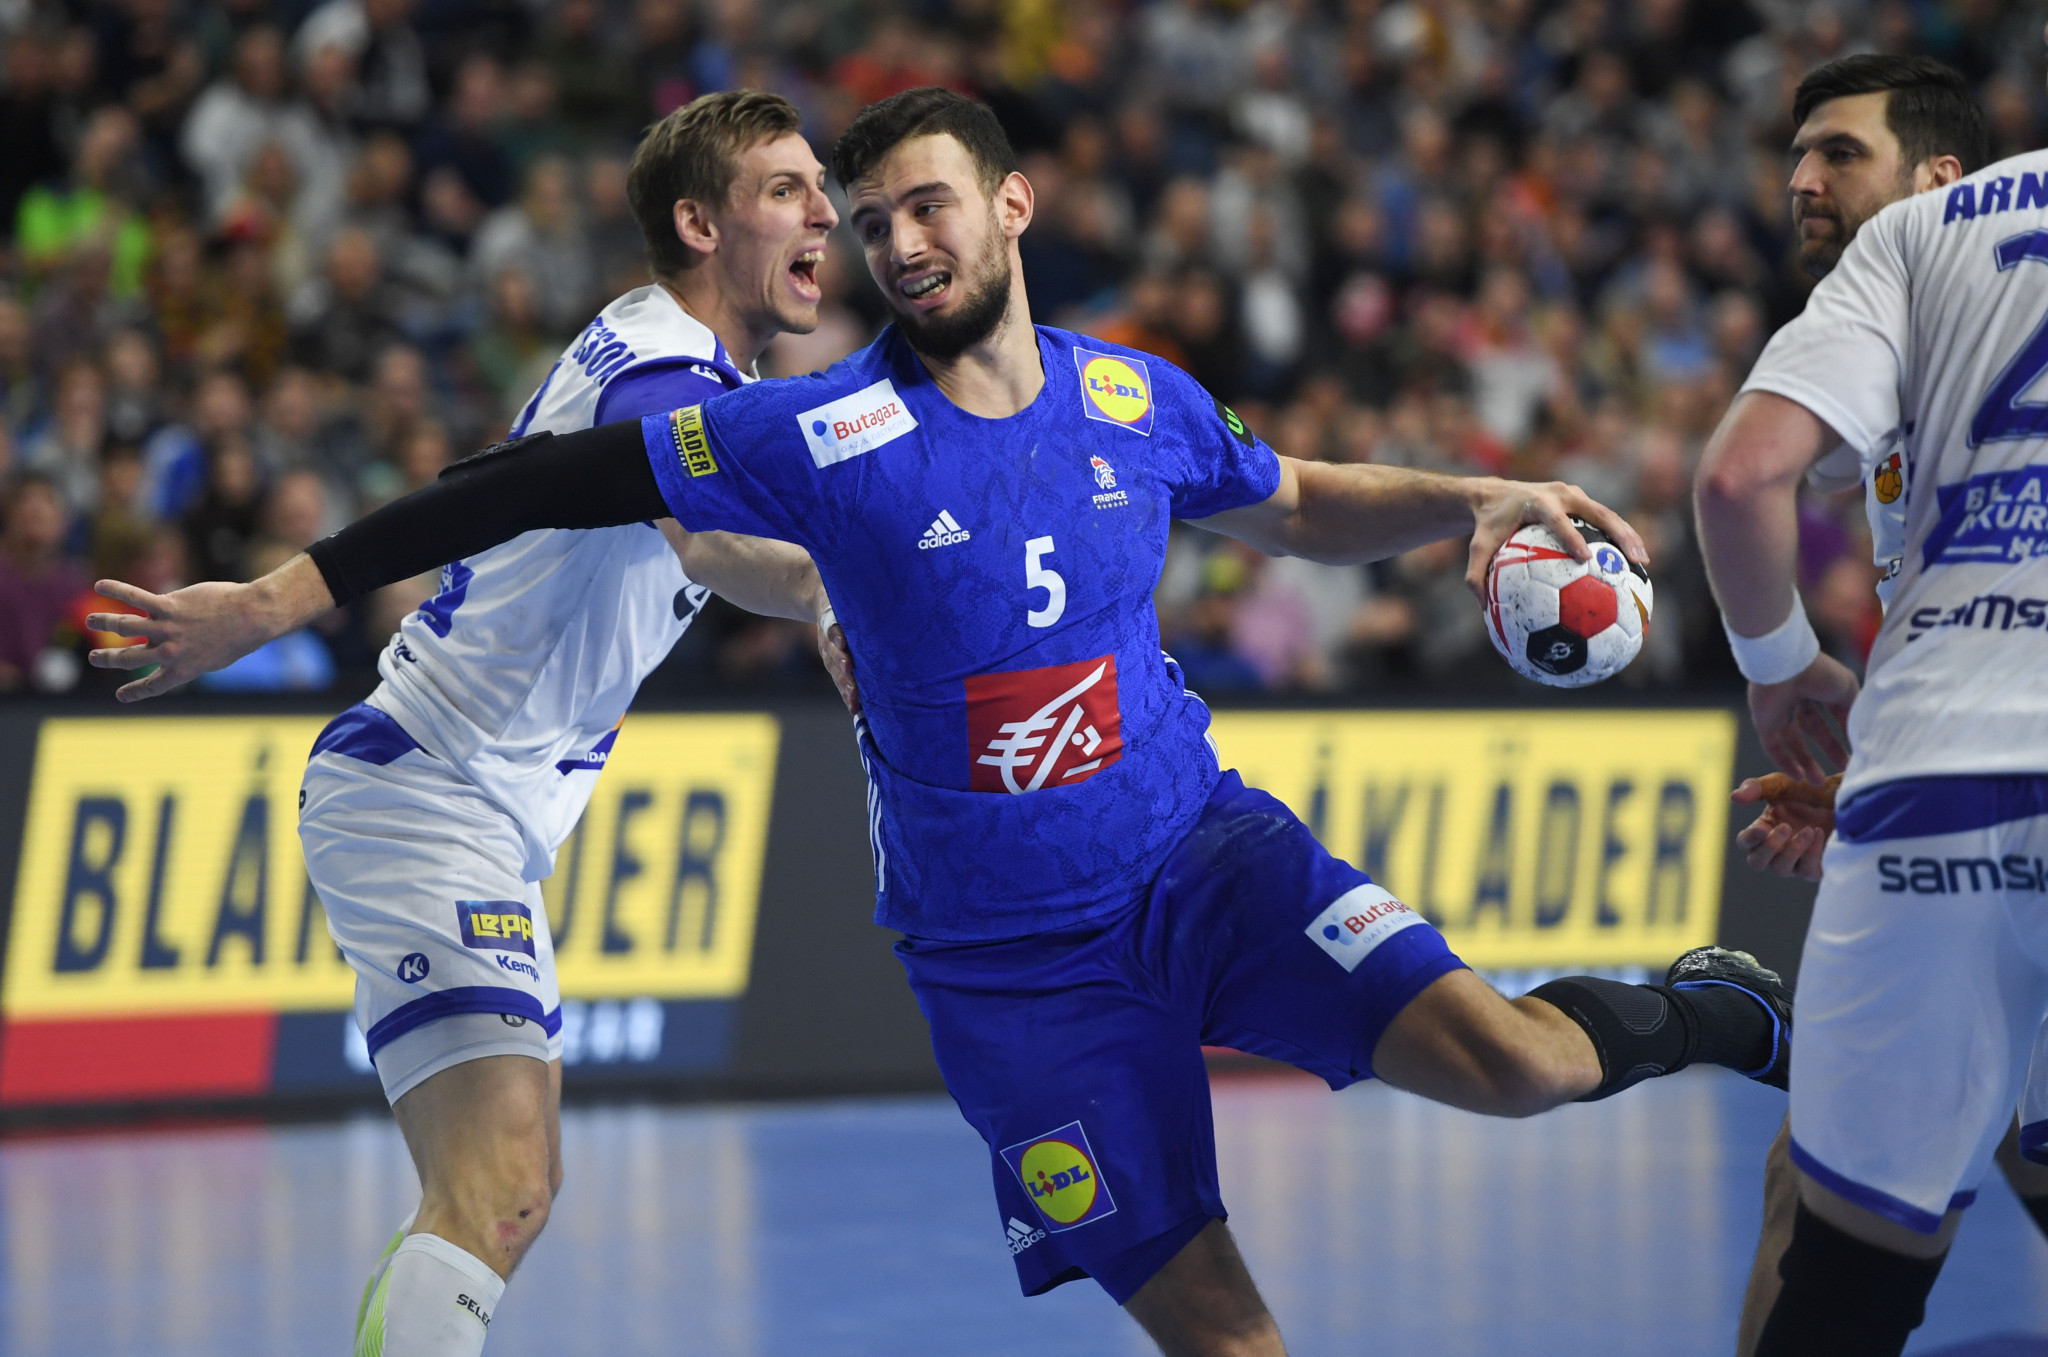 France win again as Croatia slip up at IHF Men's Handball World Championship